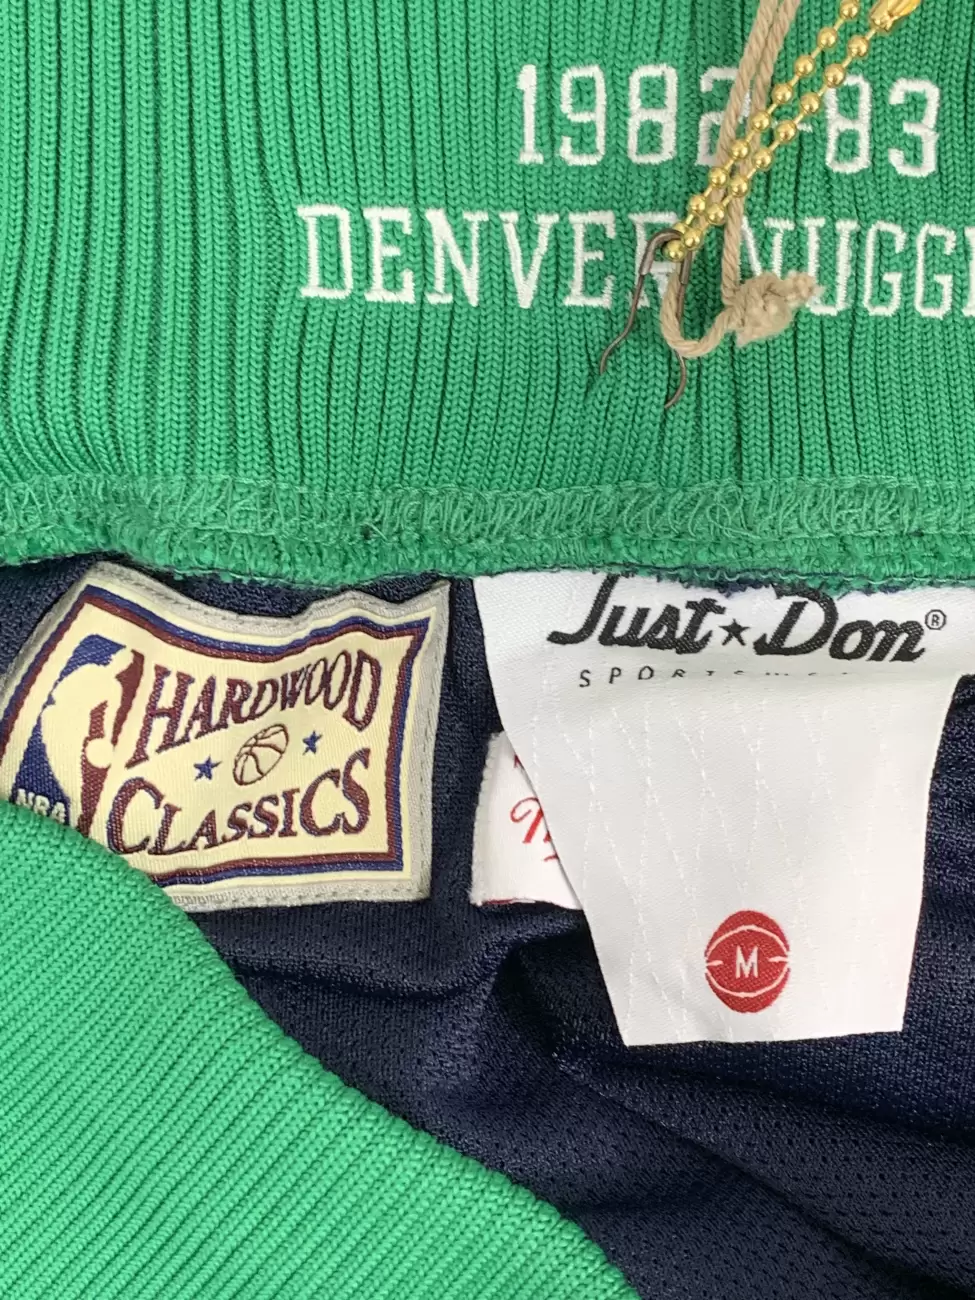 33285 - Just Don Classic Shorts Denver Nuggets 1982-83 | Item Details ...